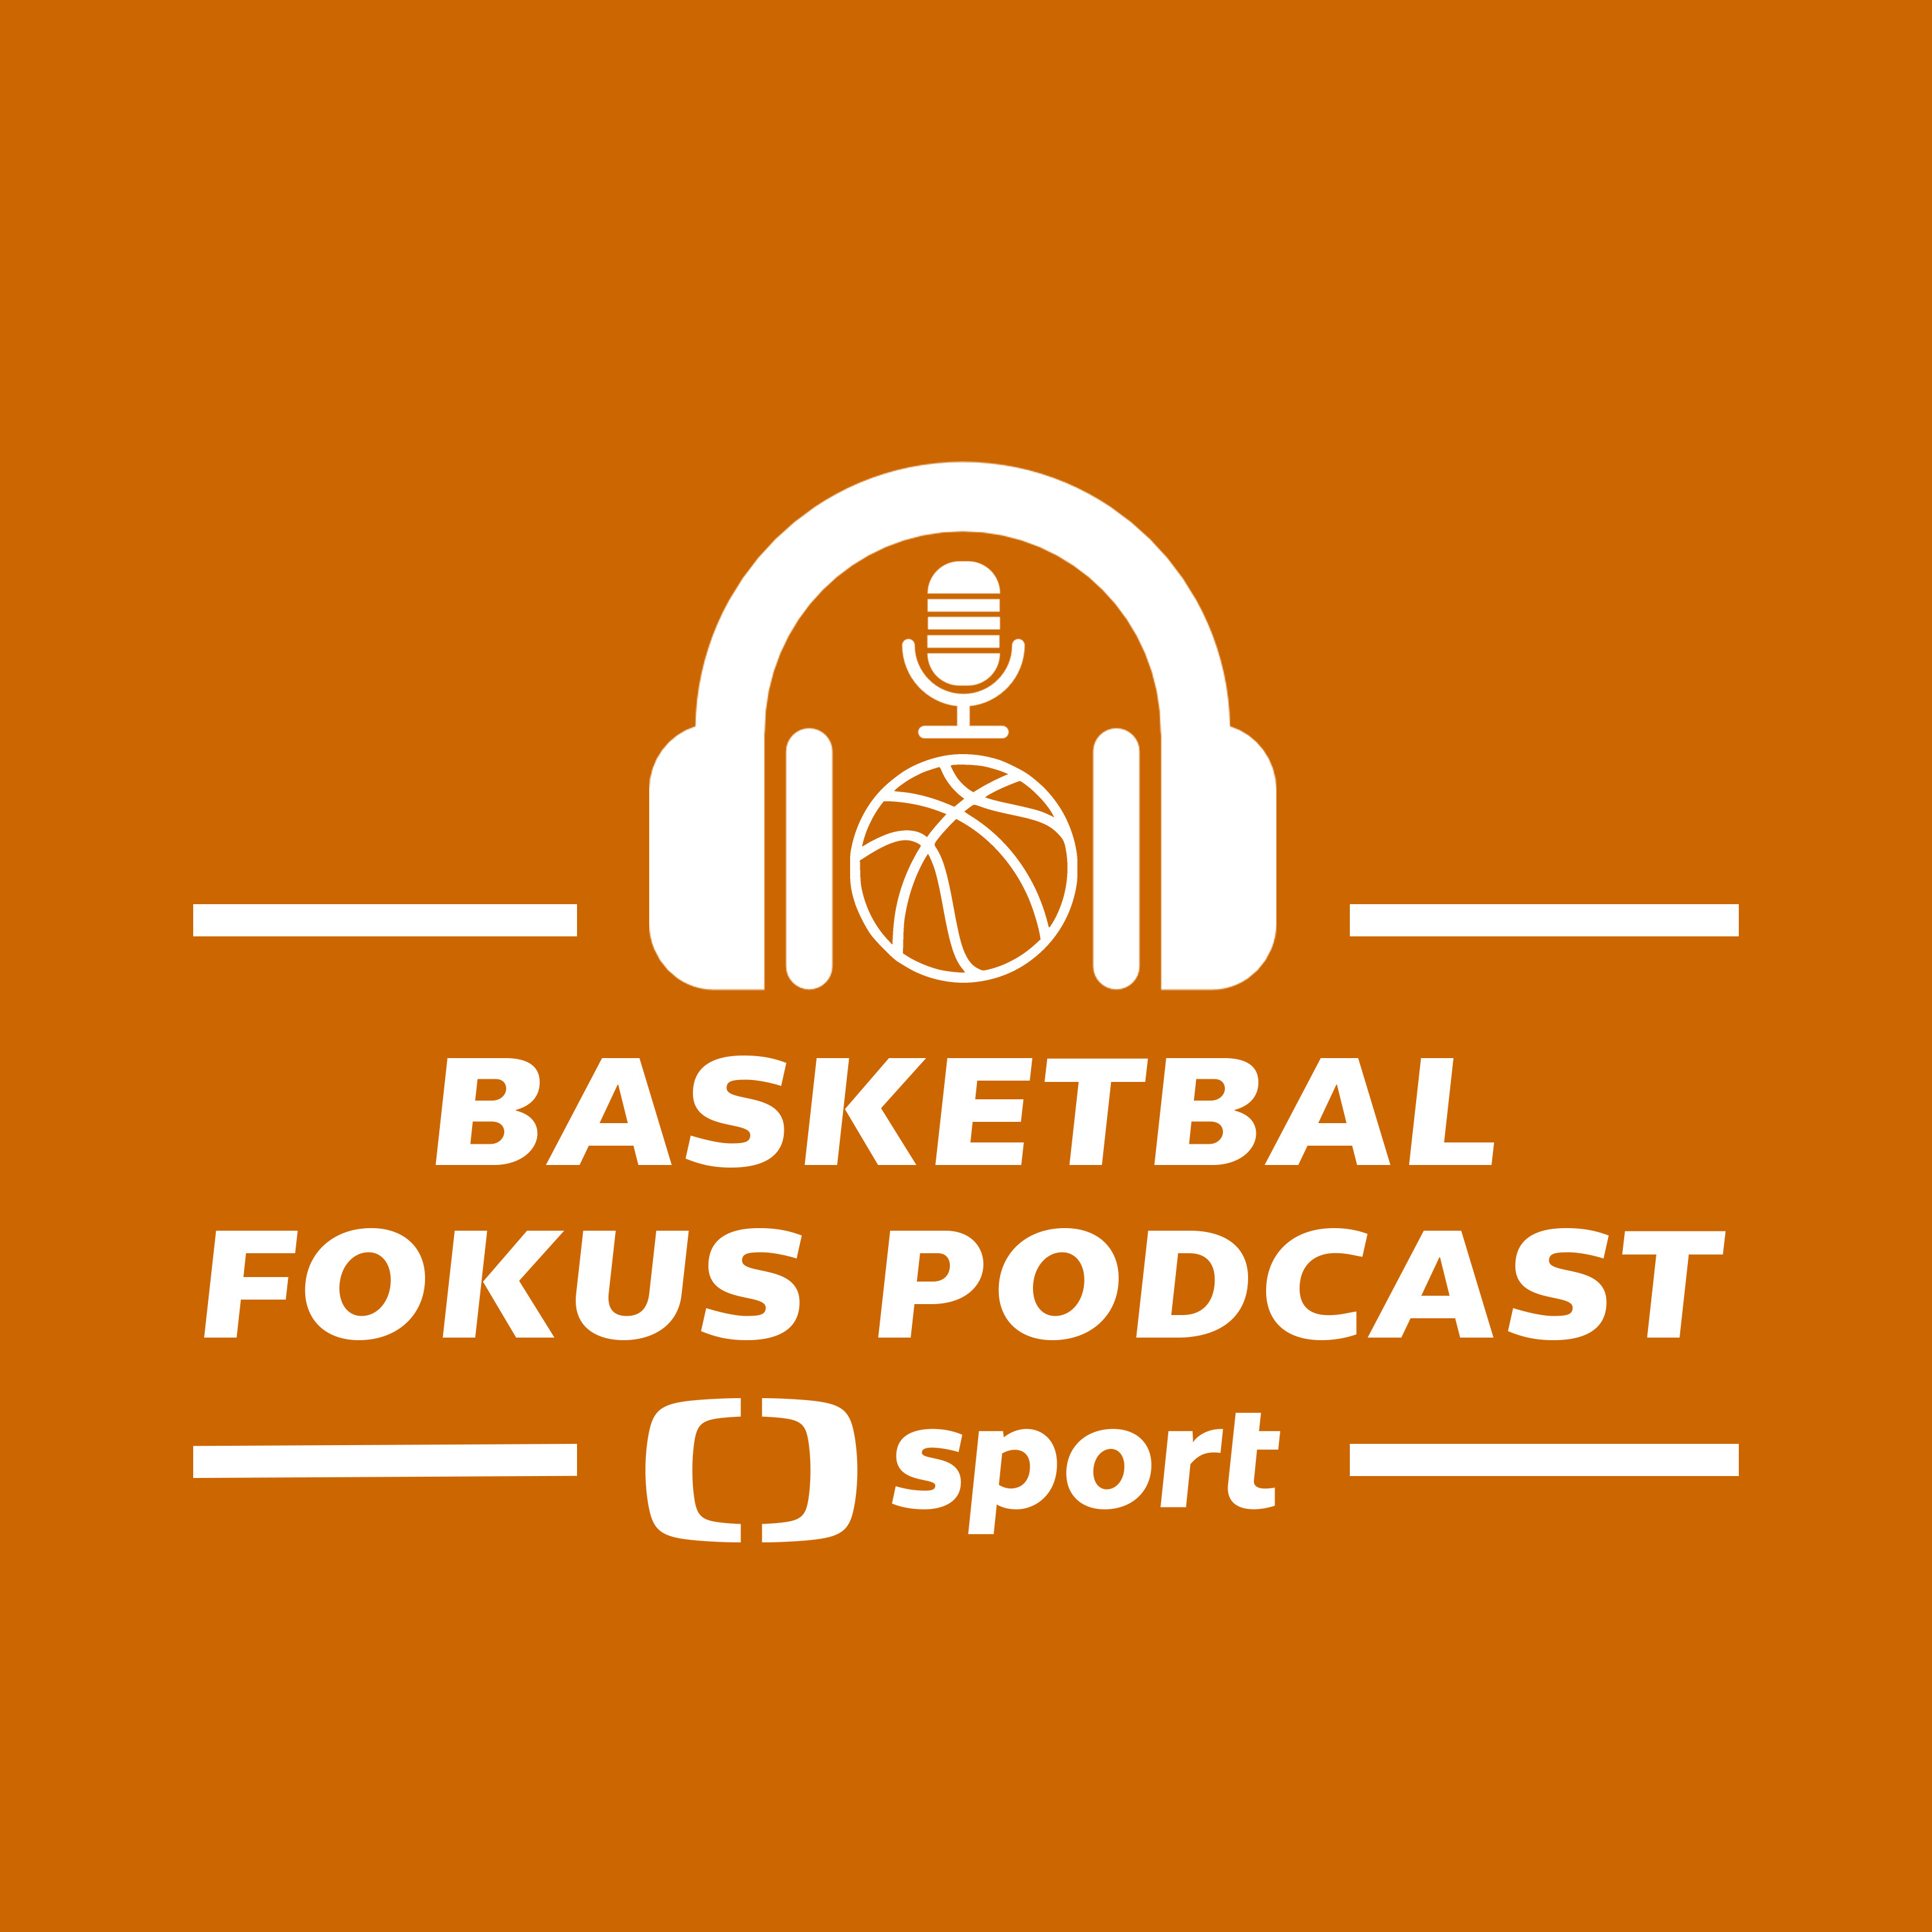 Basketbal fokus podcast: Balvín a Hruban o Eurobasketu, Satoranském a náročném programu